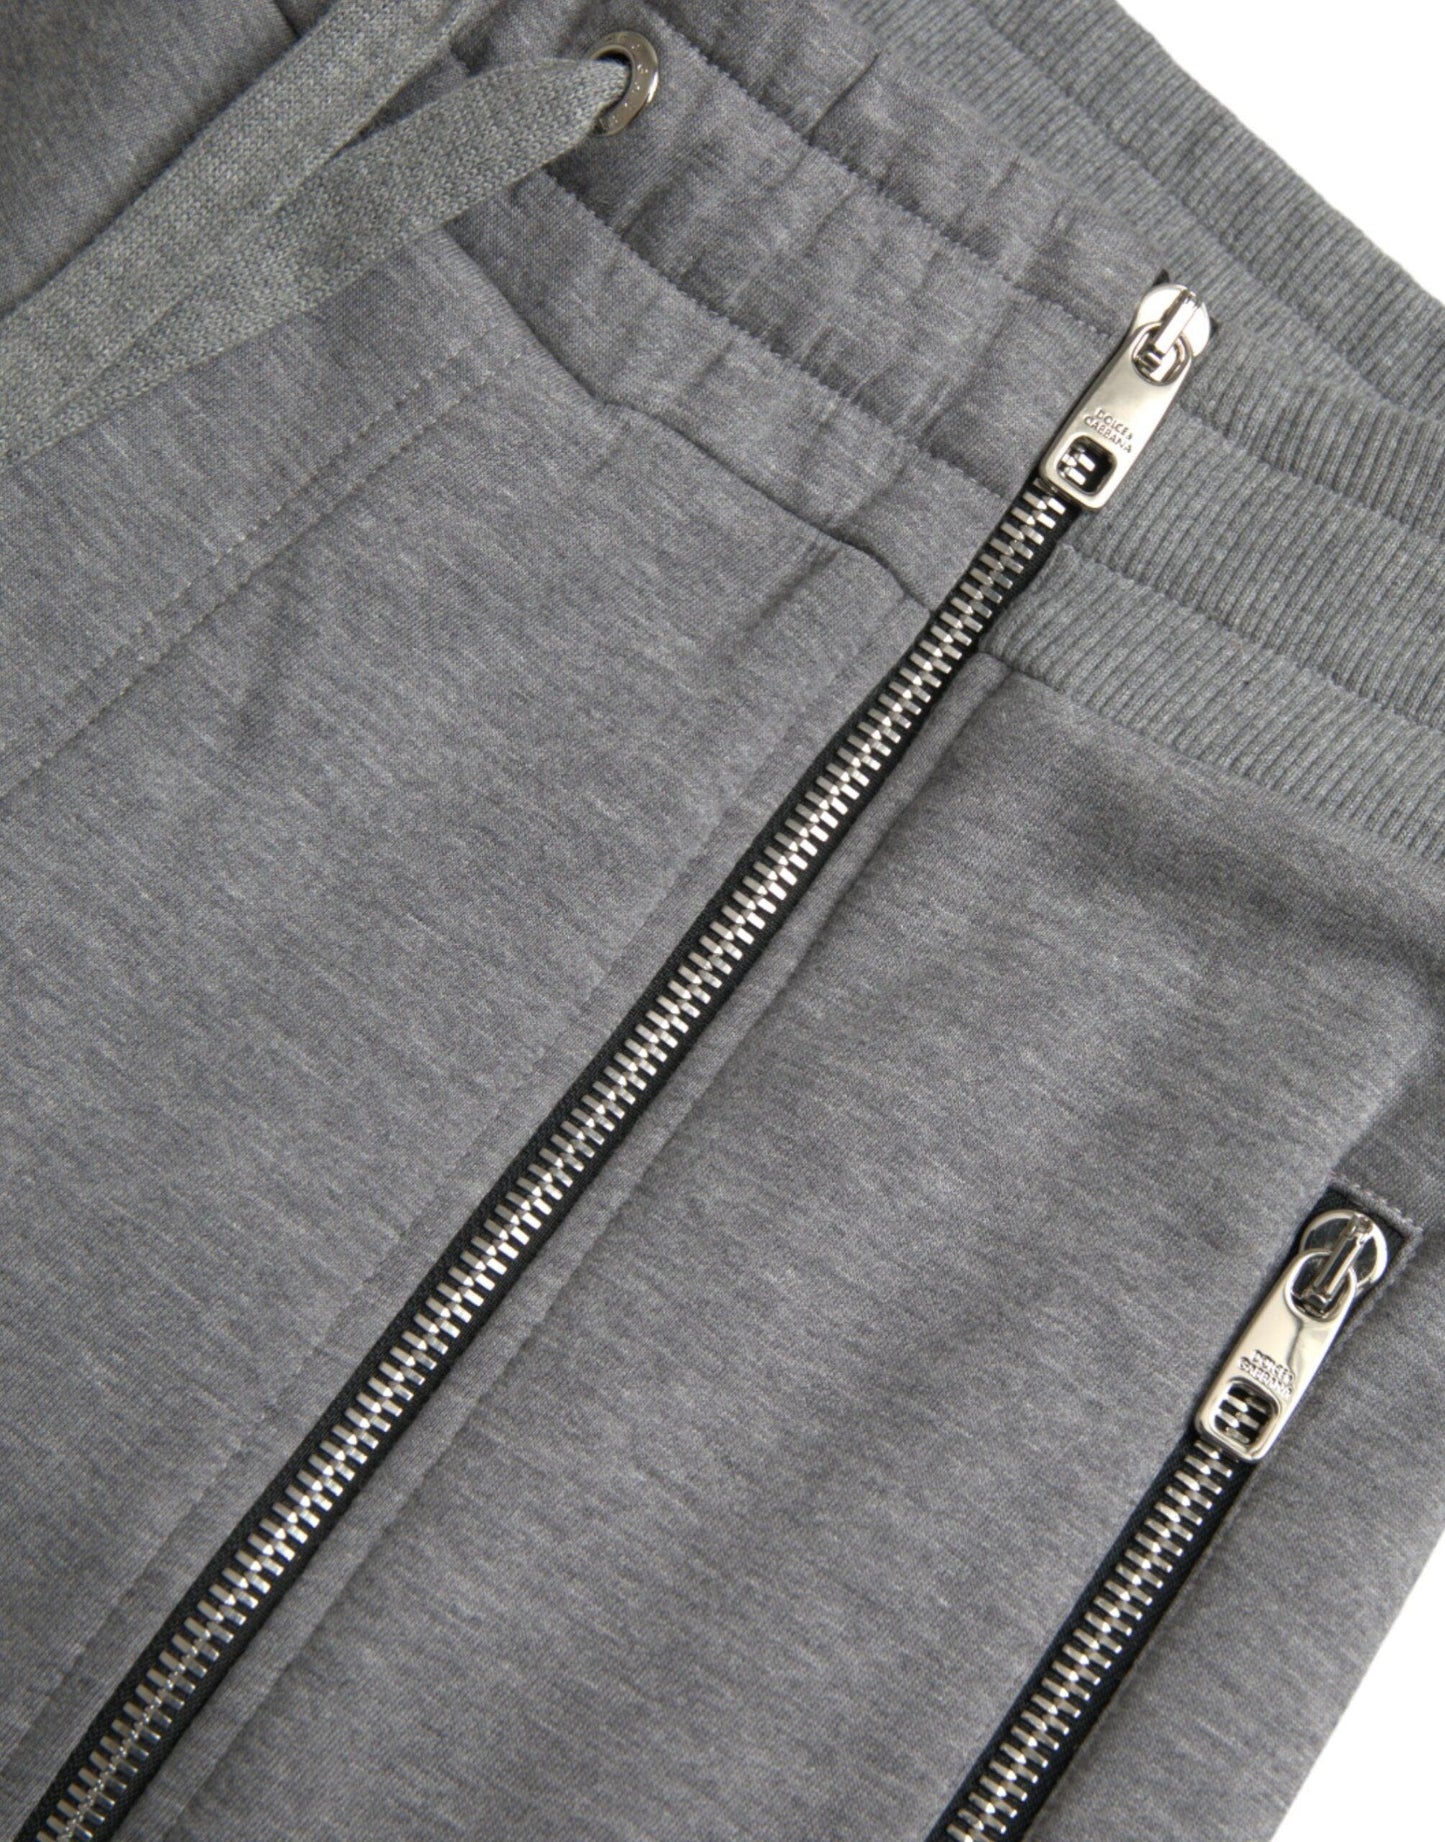 Dolce & Gabbana Gray Cotton Jogger Skinny Sweatpants Pants - PER.FASHION